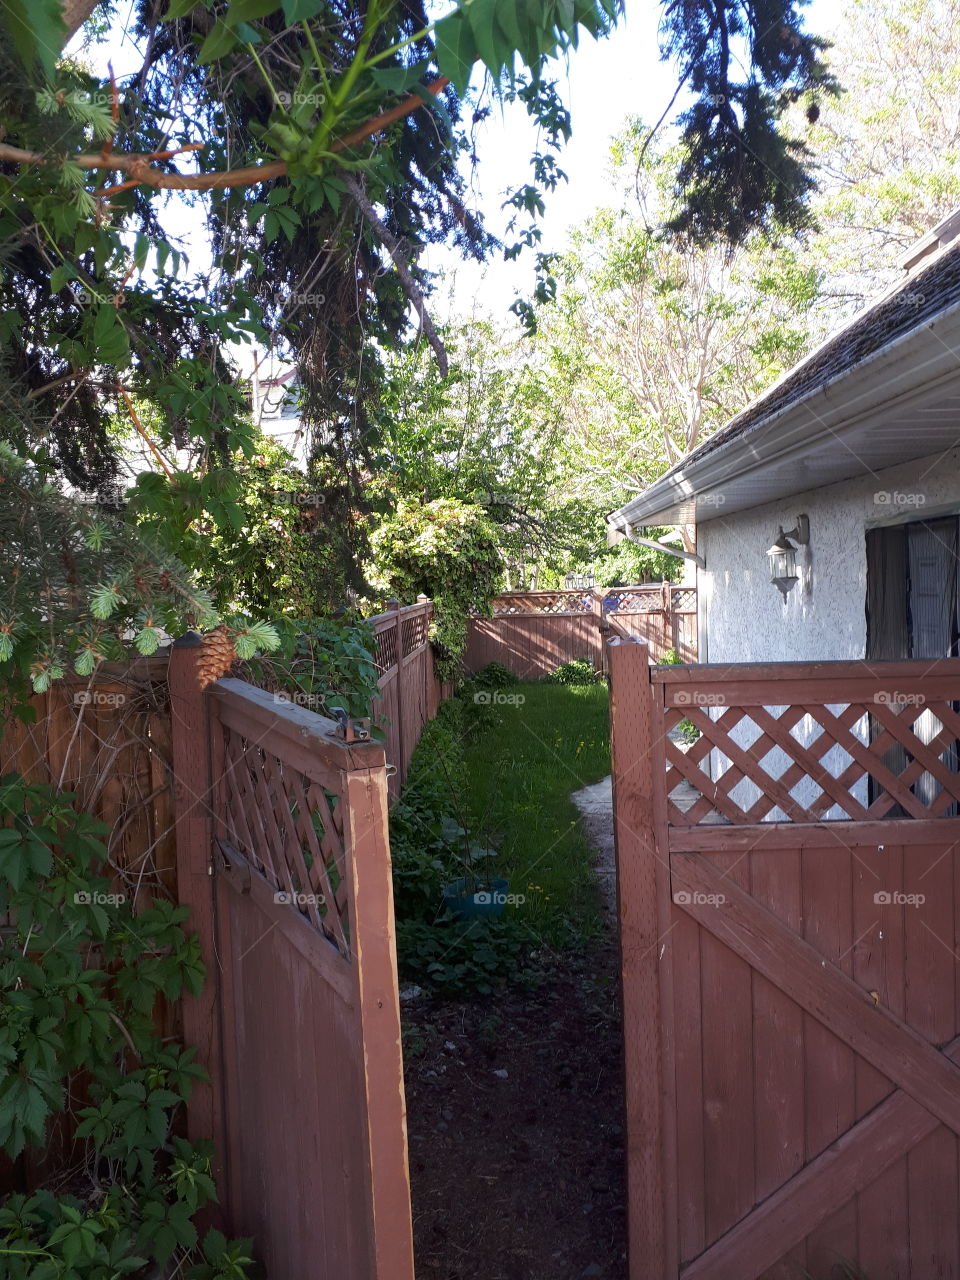 A neatly fenced backyard with greenery